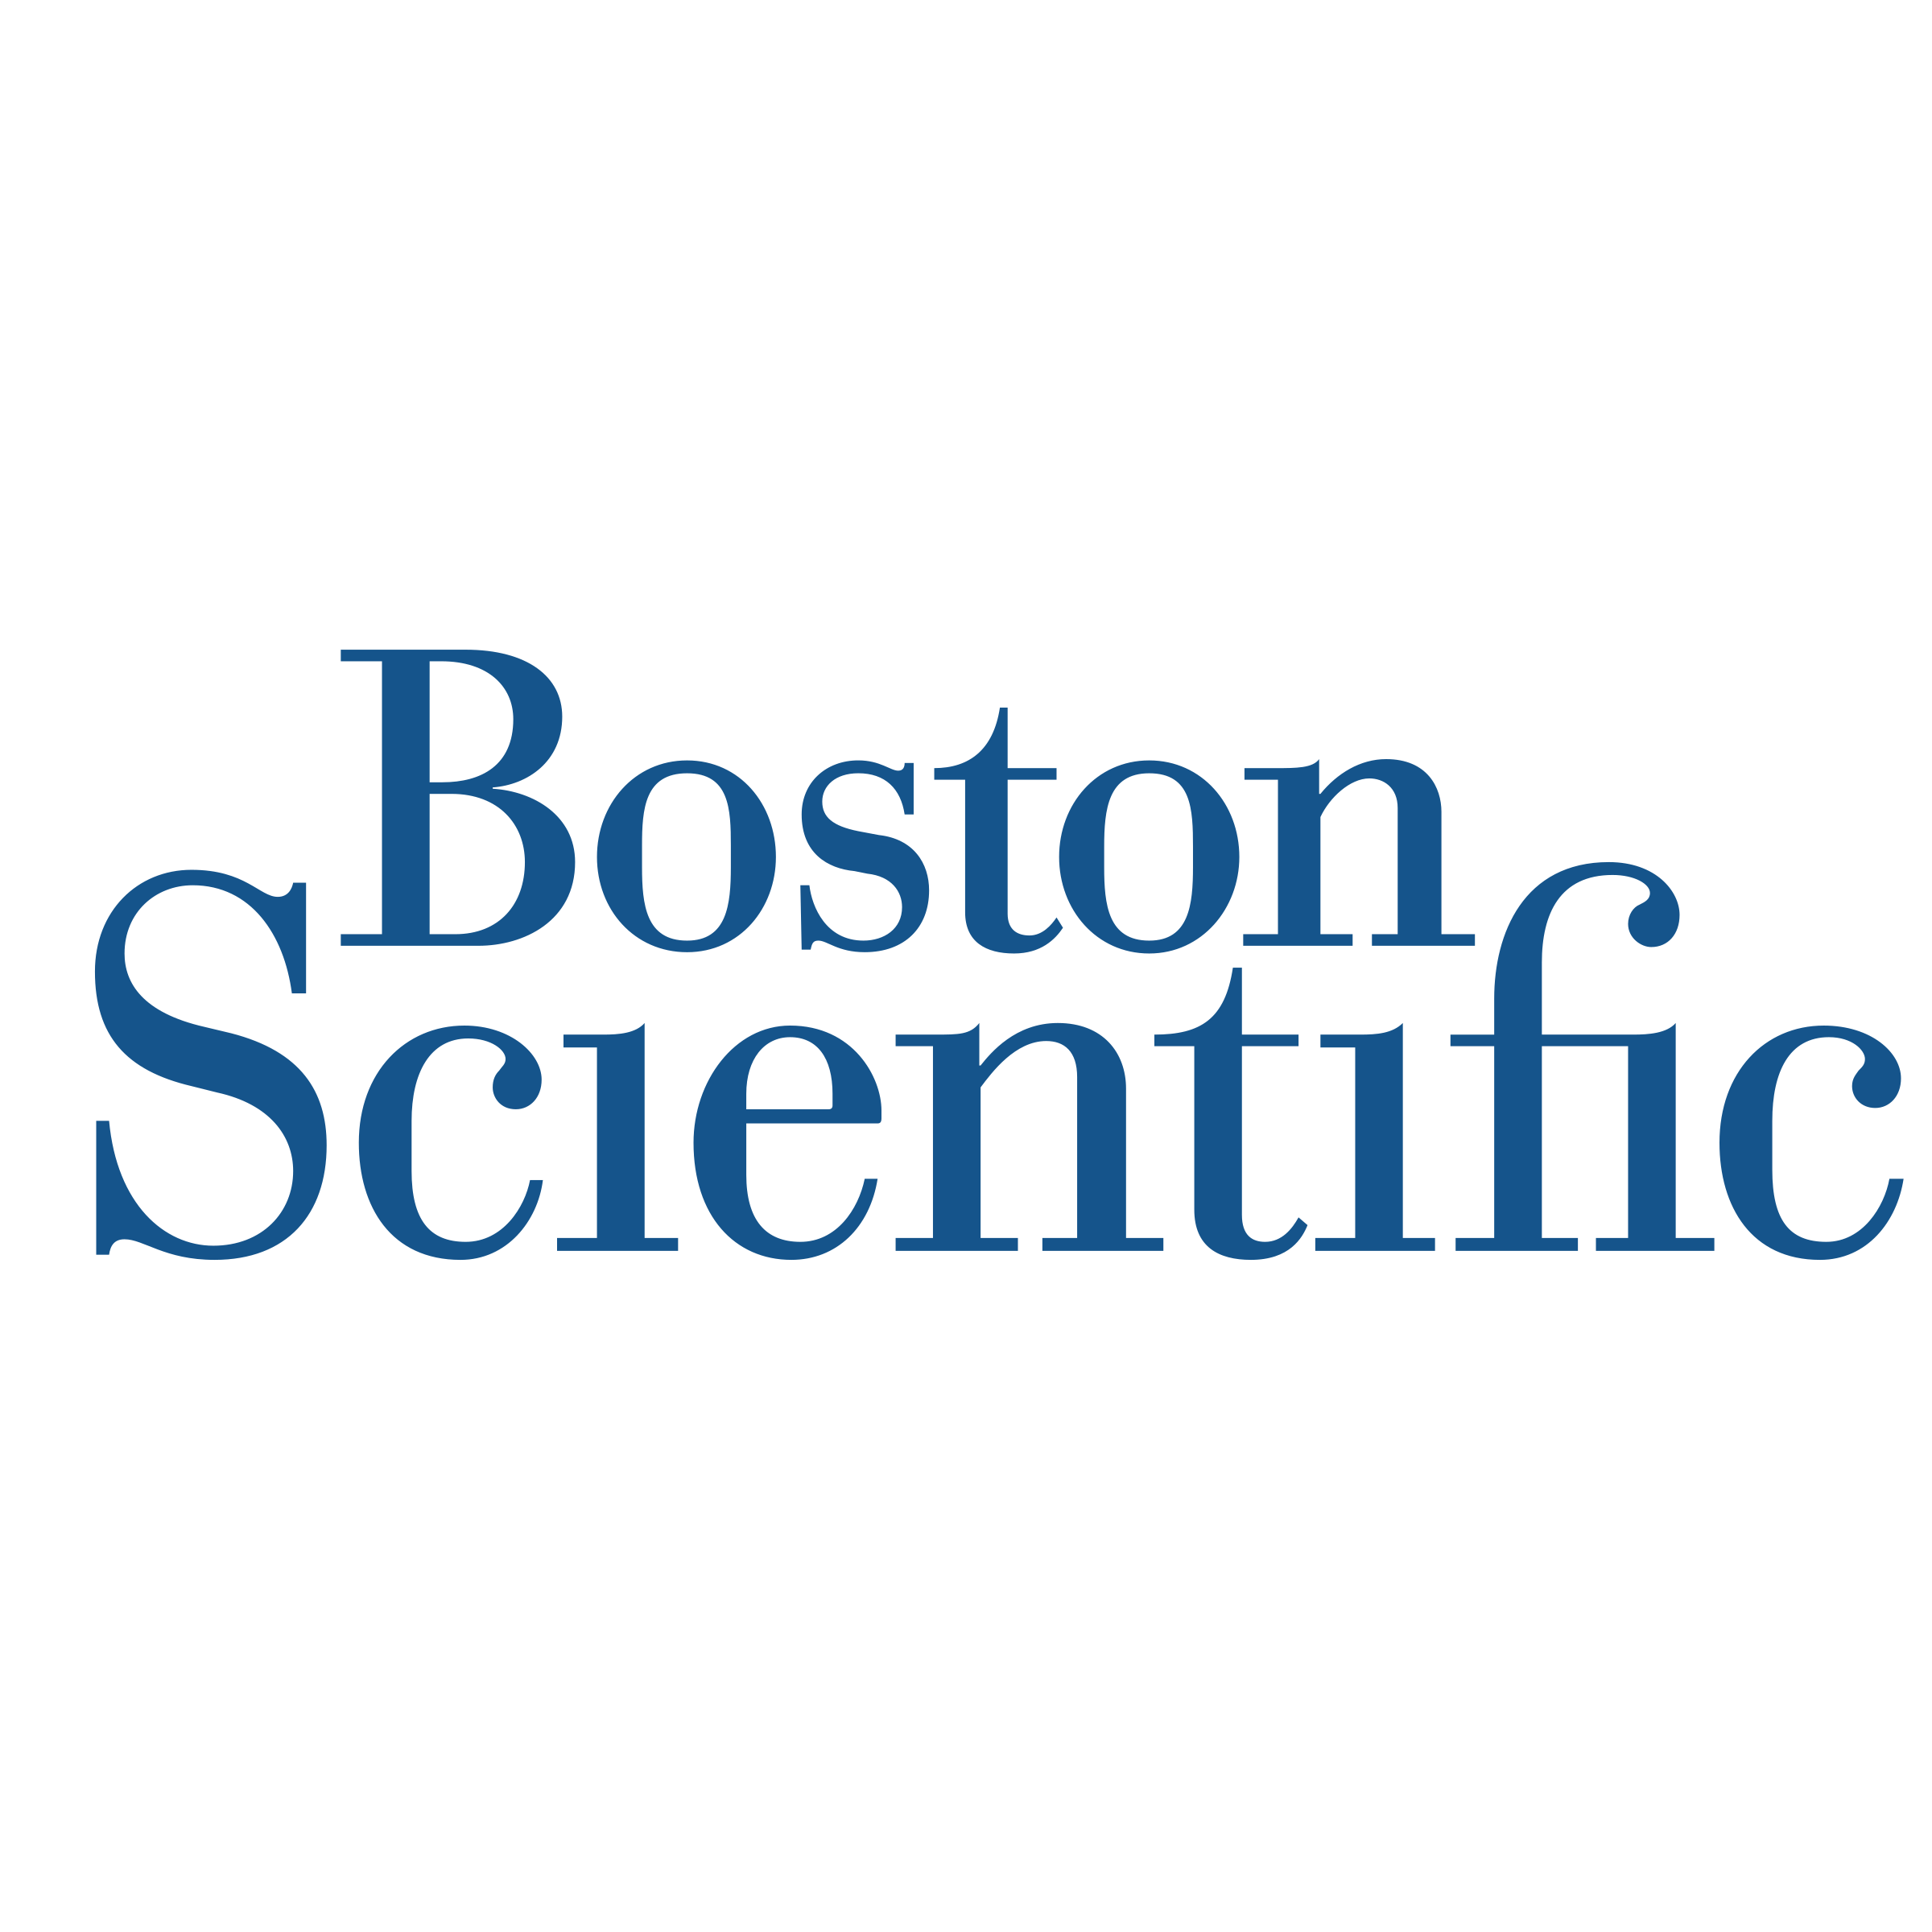 boston-scientific-logo-png-transparent.png